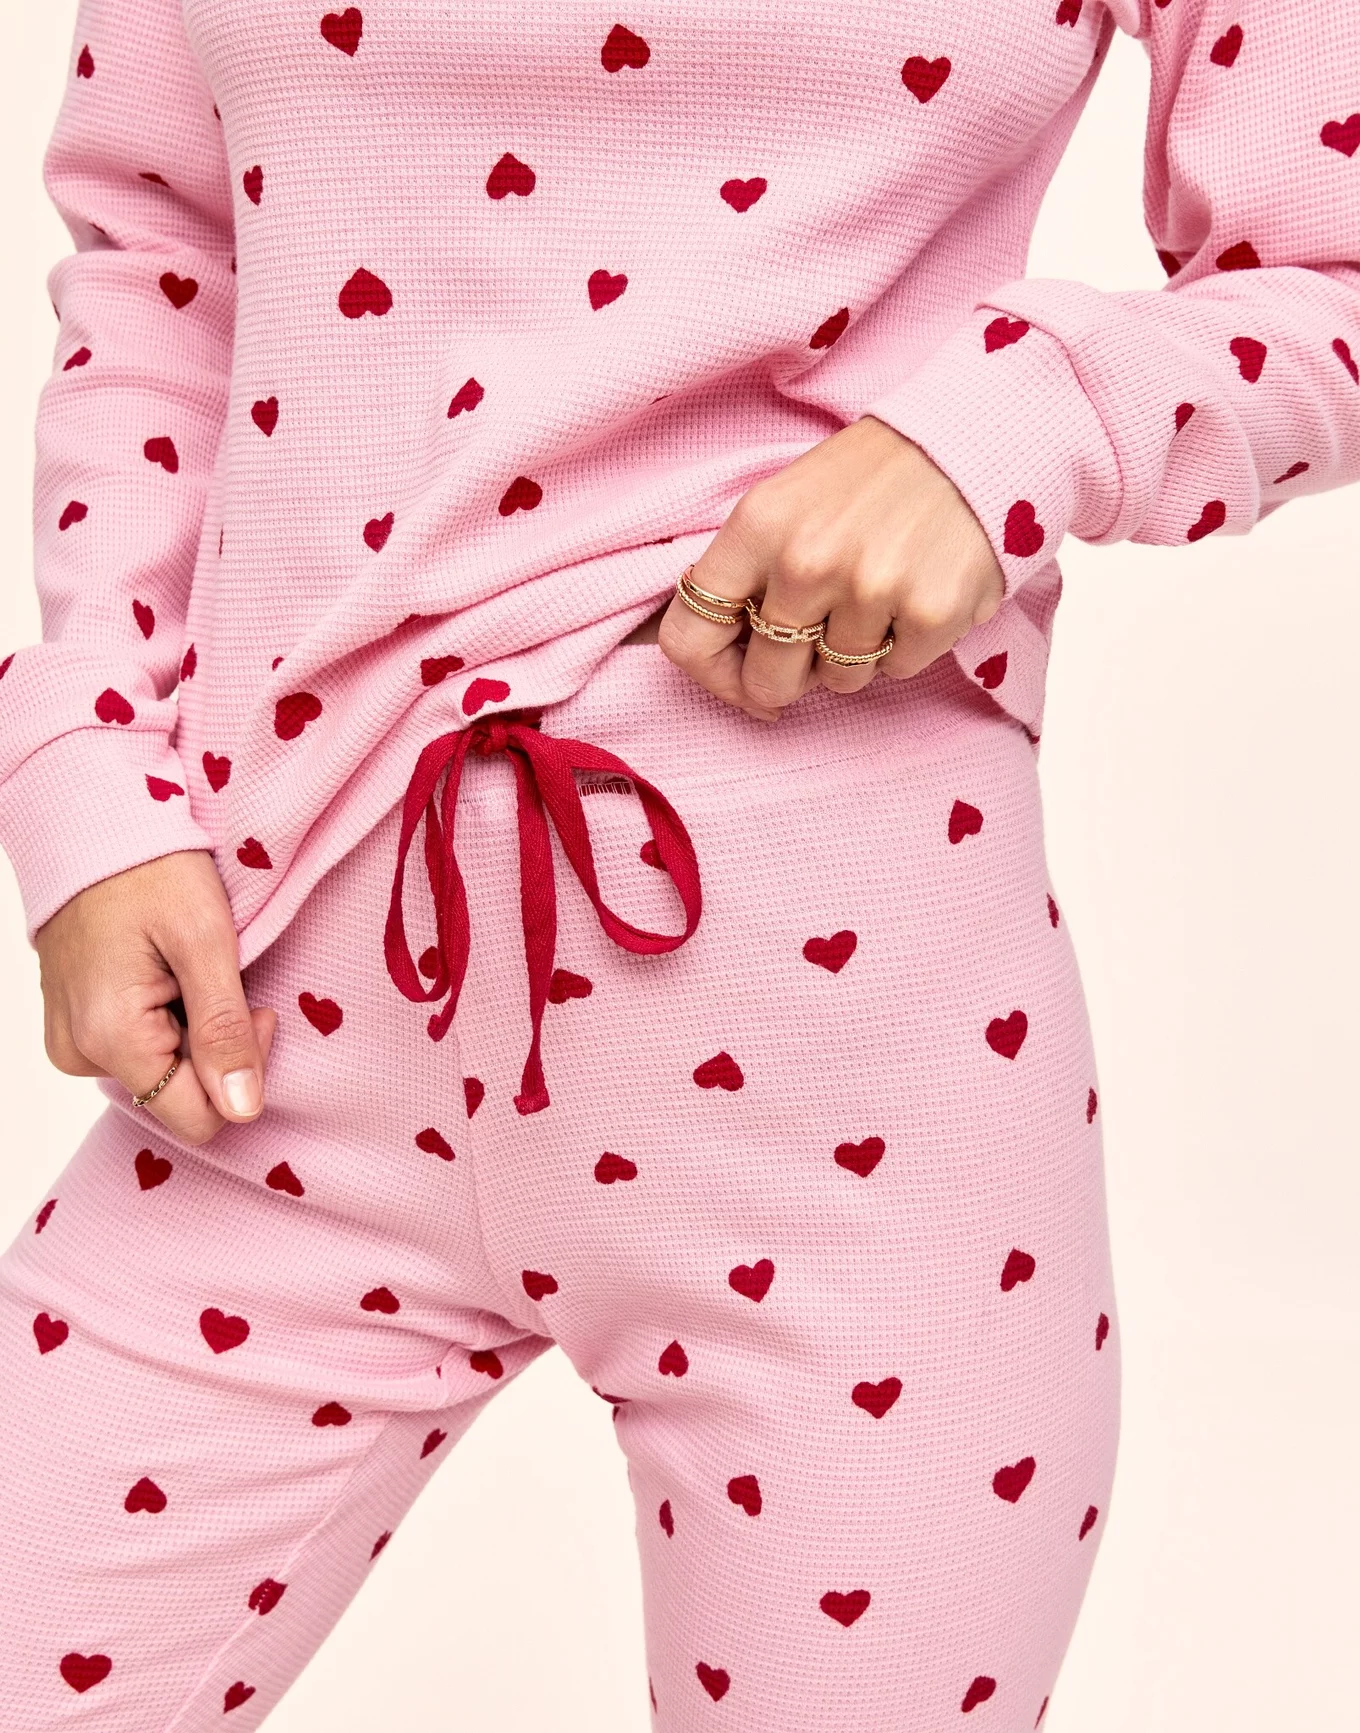 Intimates & Sleepwear, Red Heart Pajama Pants